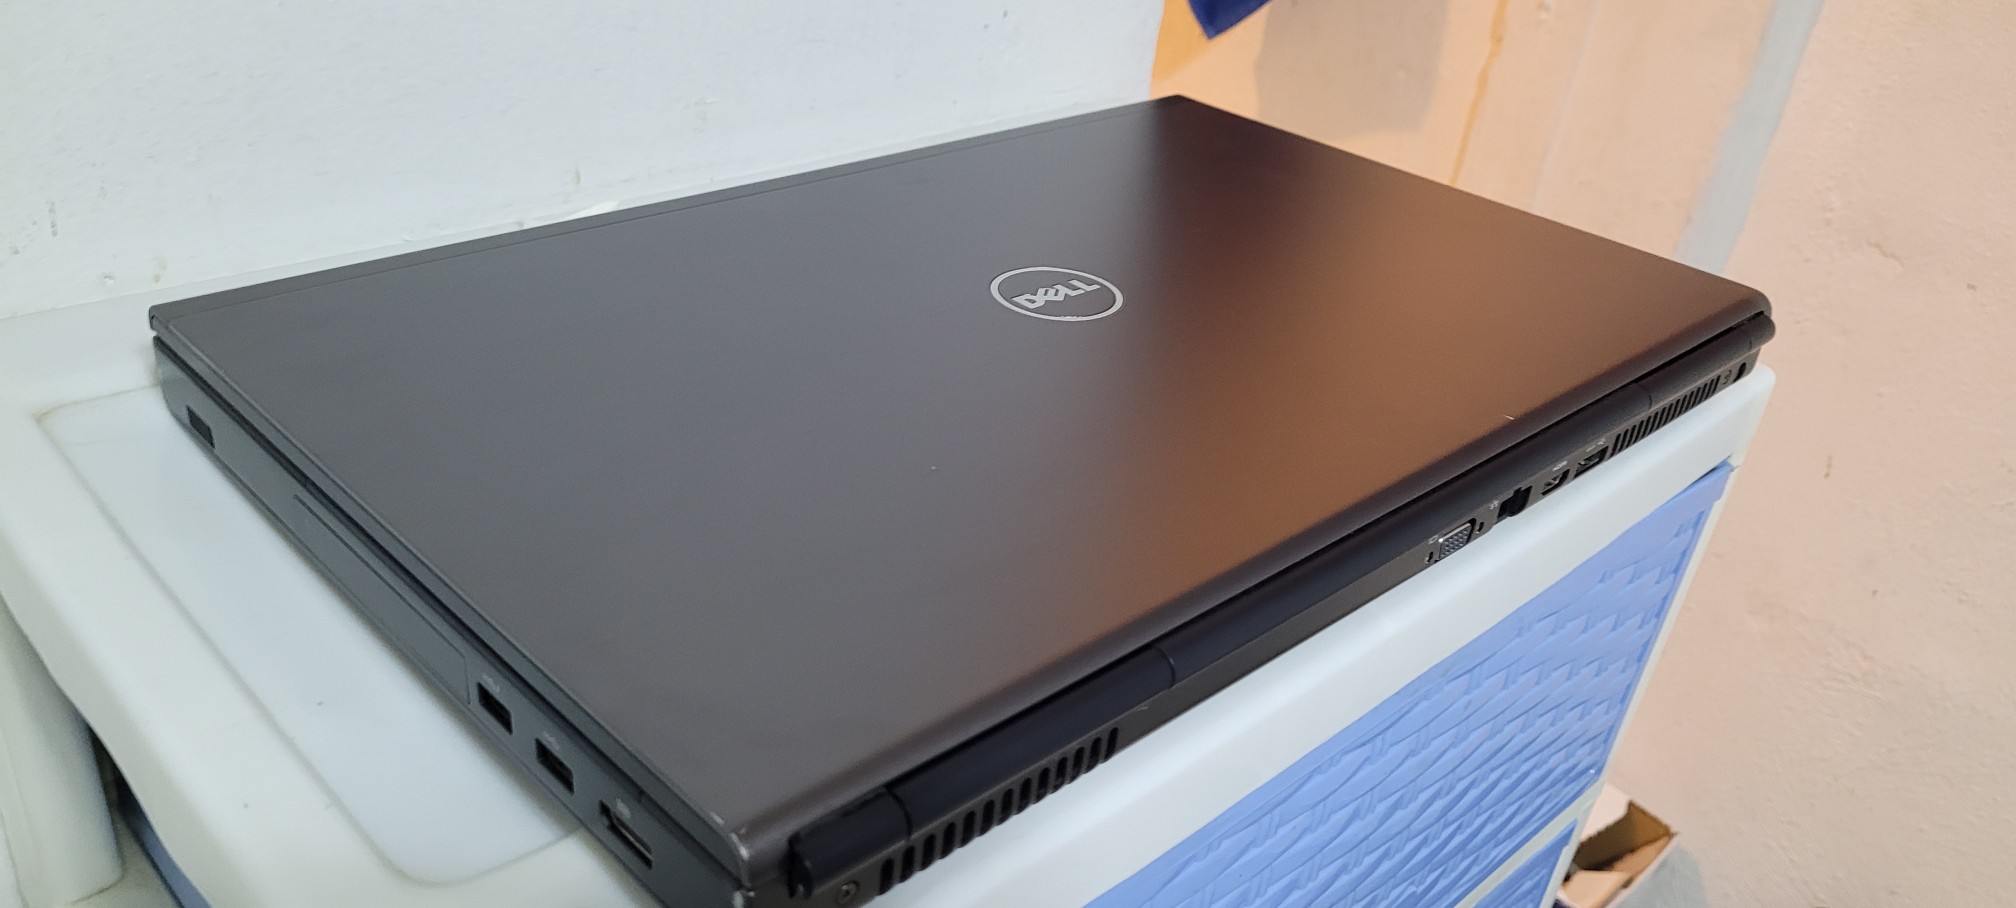 computadoras y laptops - Dell m6700 17 Pulg Core i7 Ram 16gb Disco 500gb SSD Solido Nvidea 4gb 2